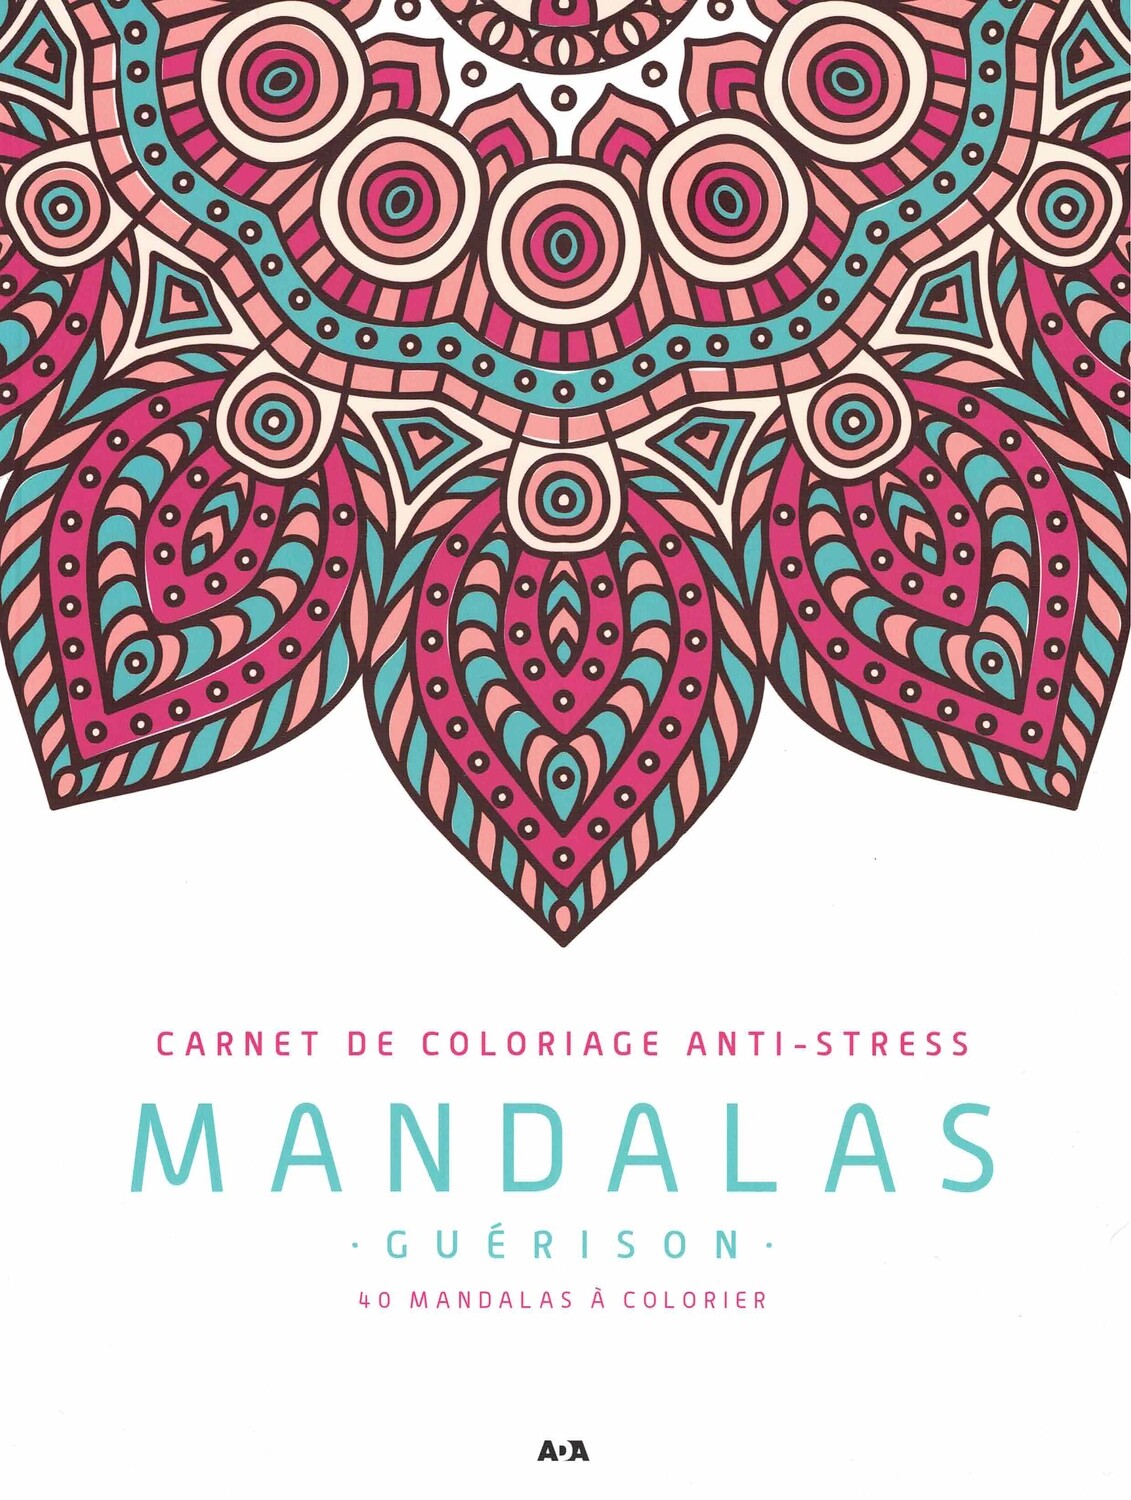 Carnet de coloriage Anti-stress Mandalas guérison